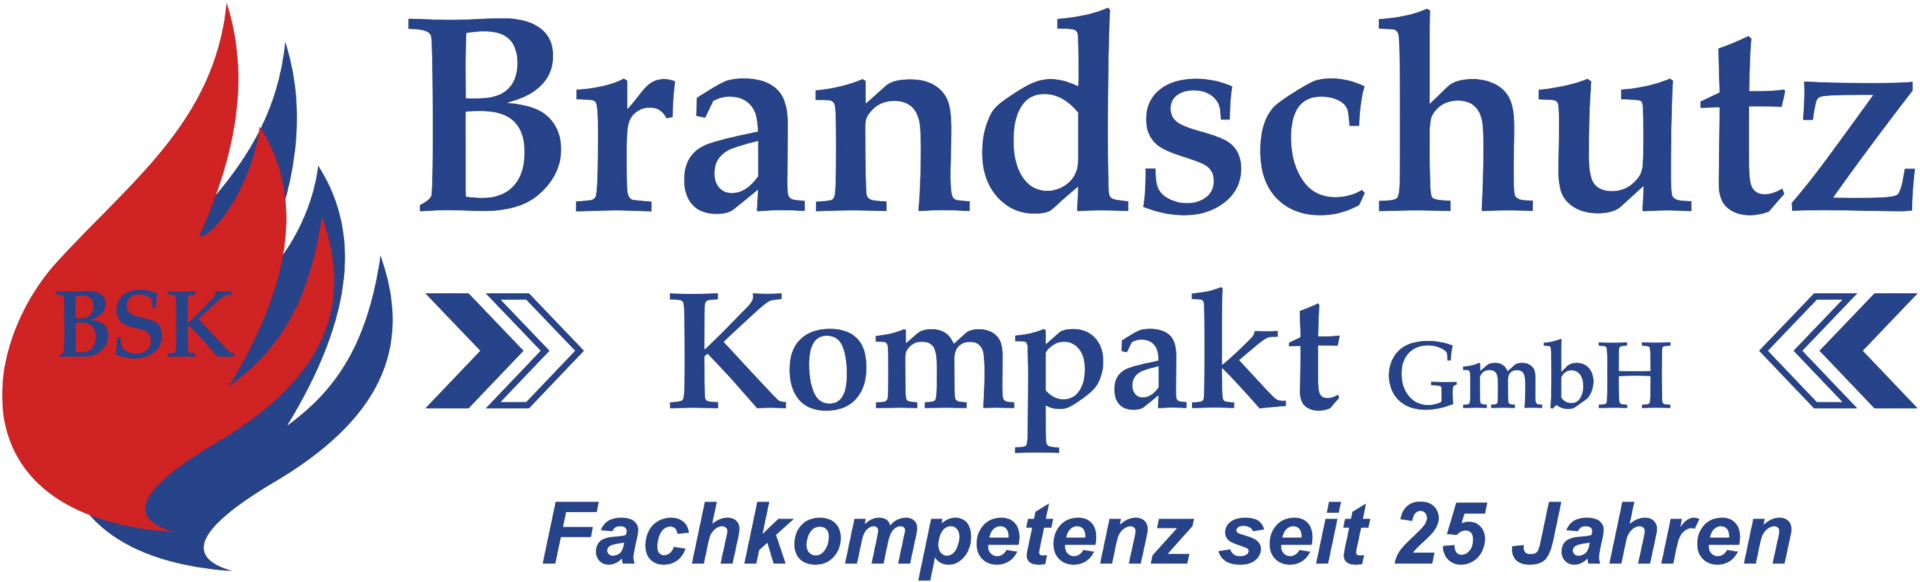 BSK Brandschutz Kompakt GmbH